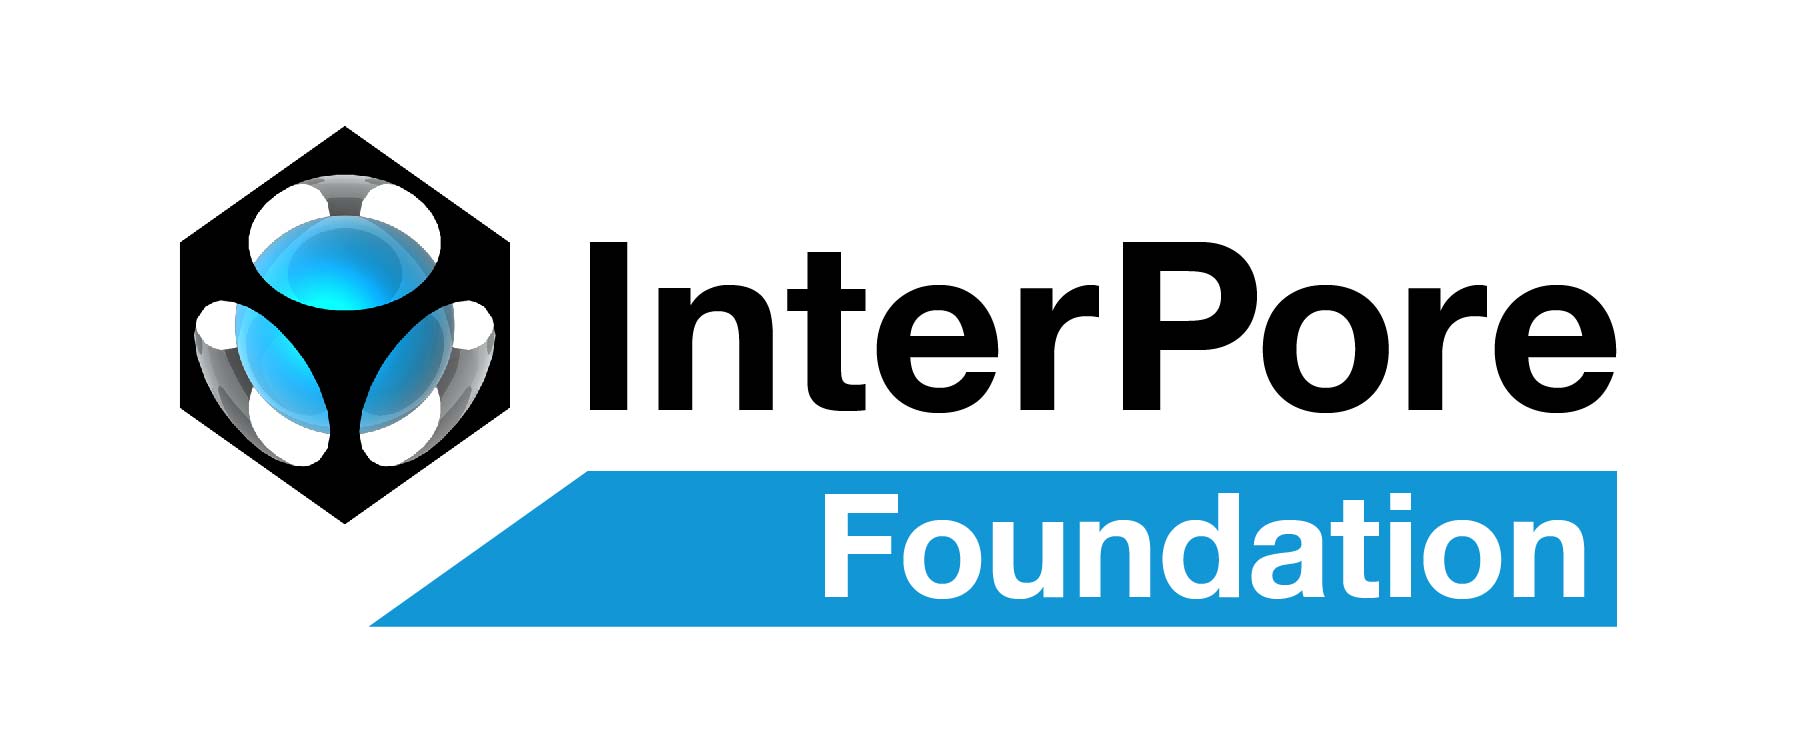 InterPore-Foundation-m.jpg